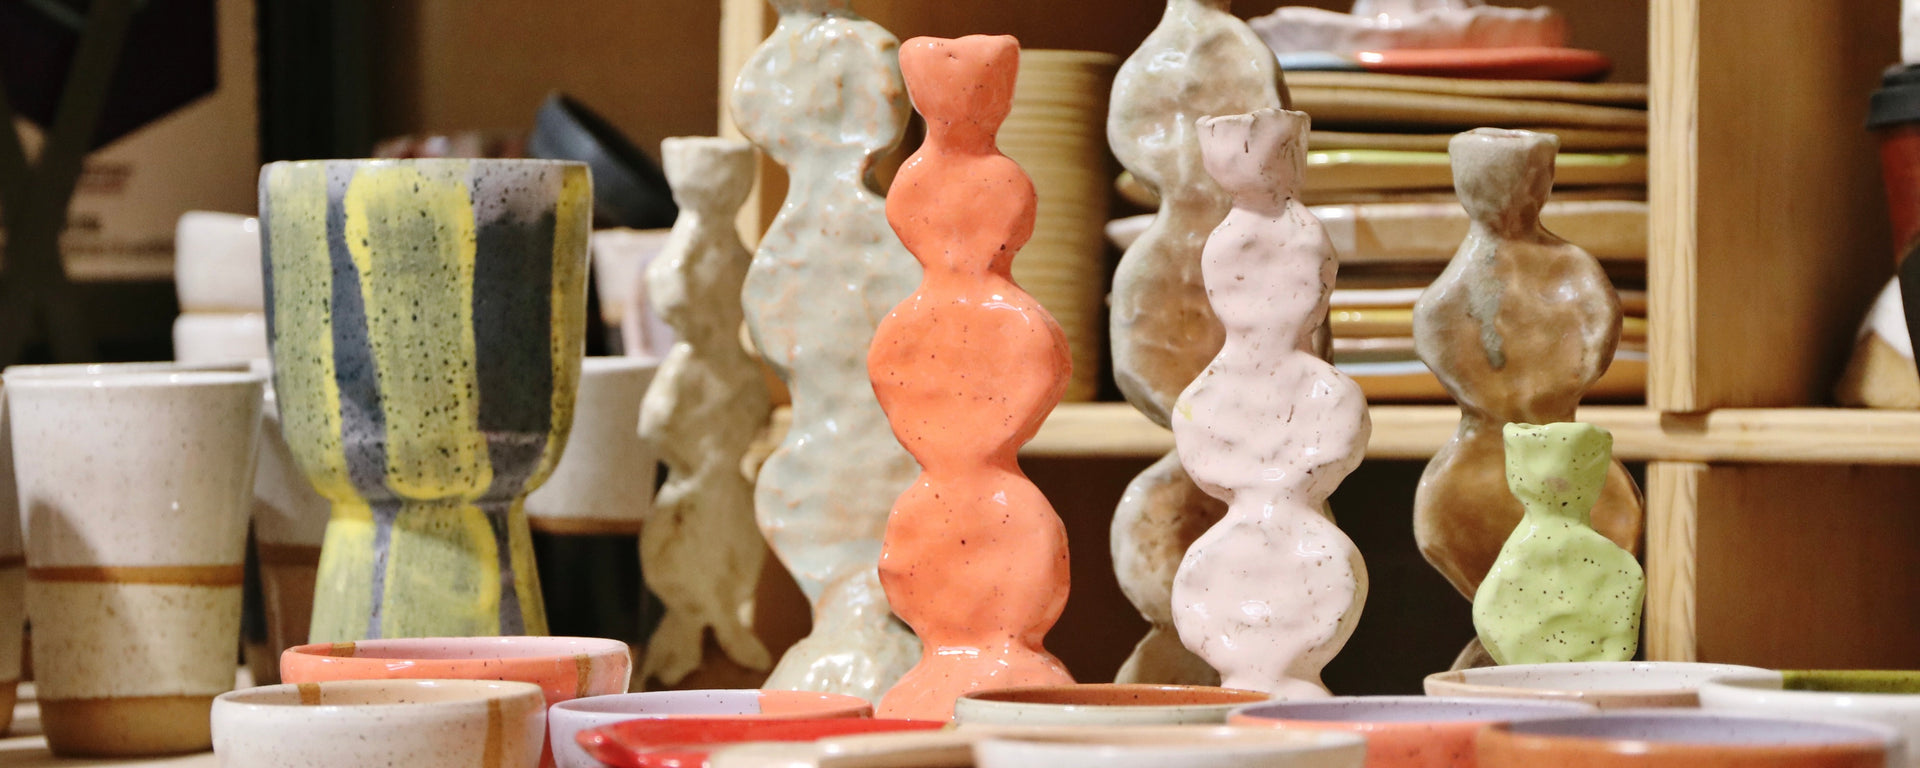 paper bag head tumblr - Google Search  Ceramics pottery art, Ceramic  pottery, Pottery art